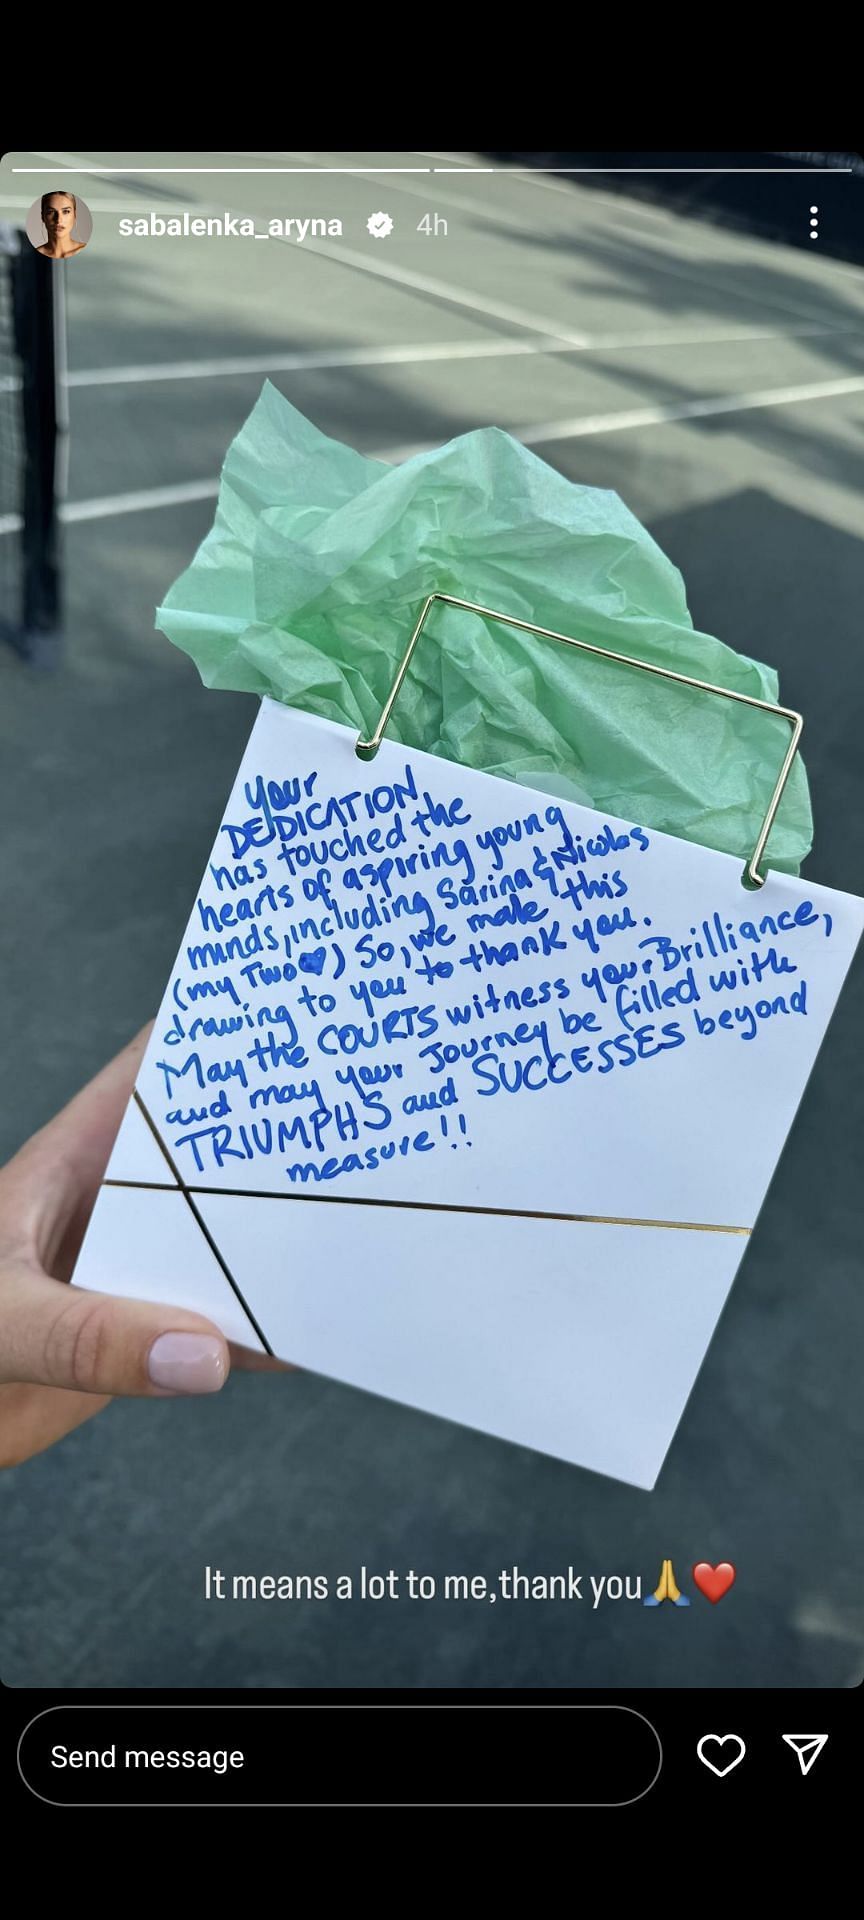 Sabalenka thanks her fan for a heartwarming note